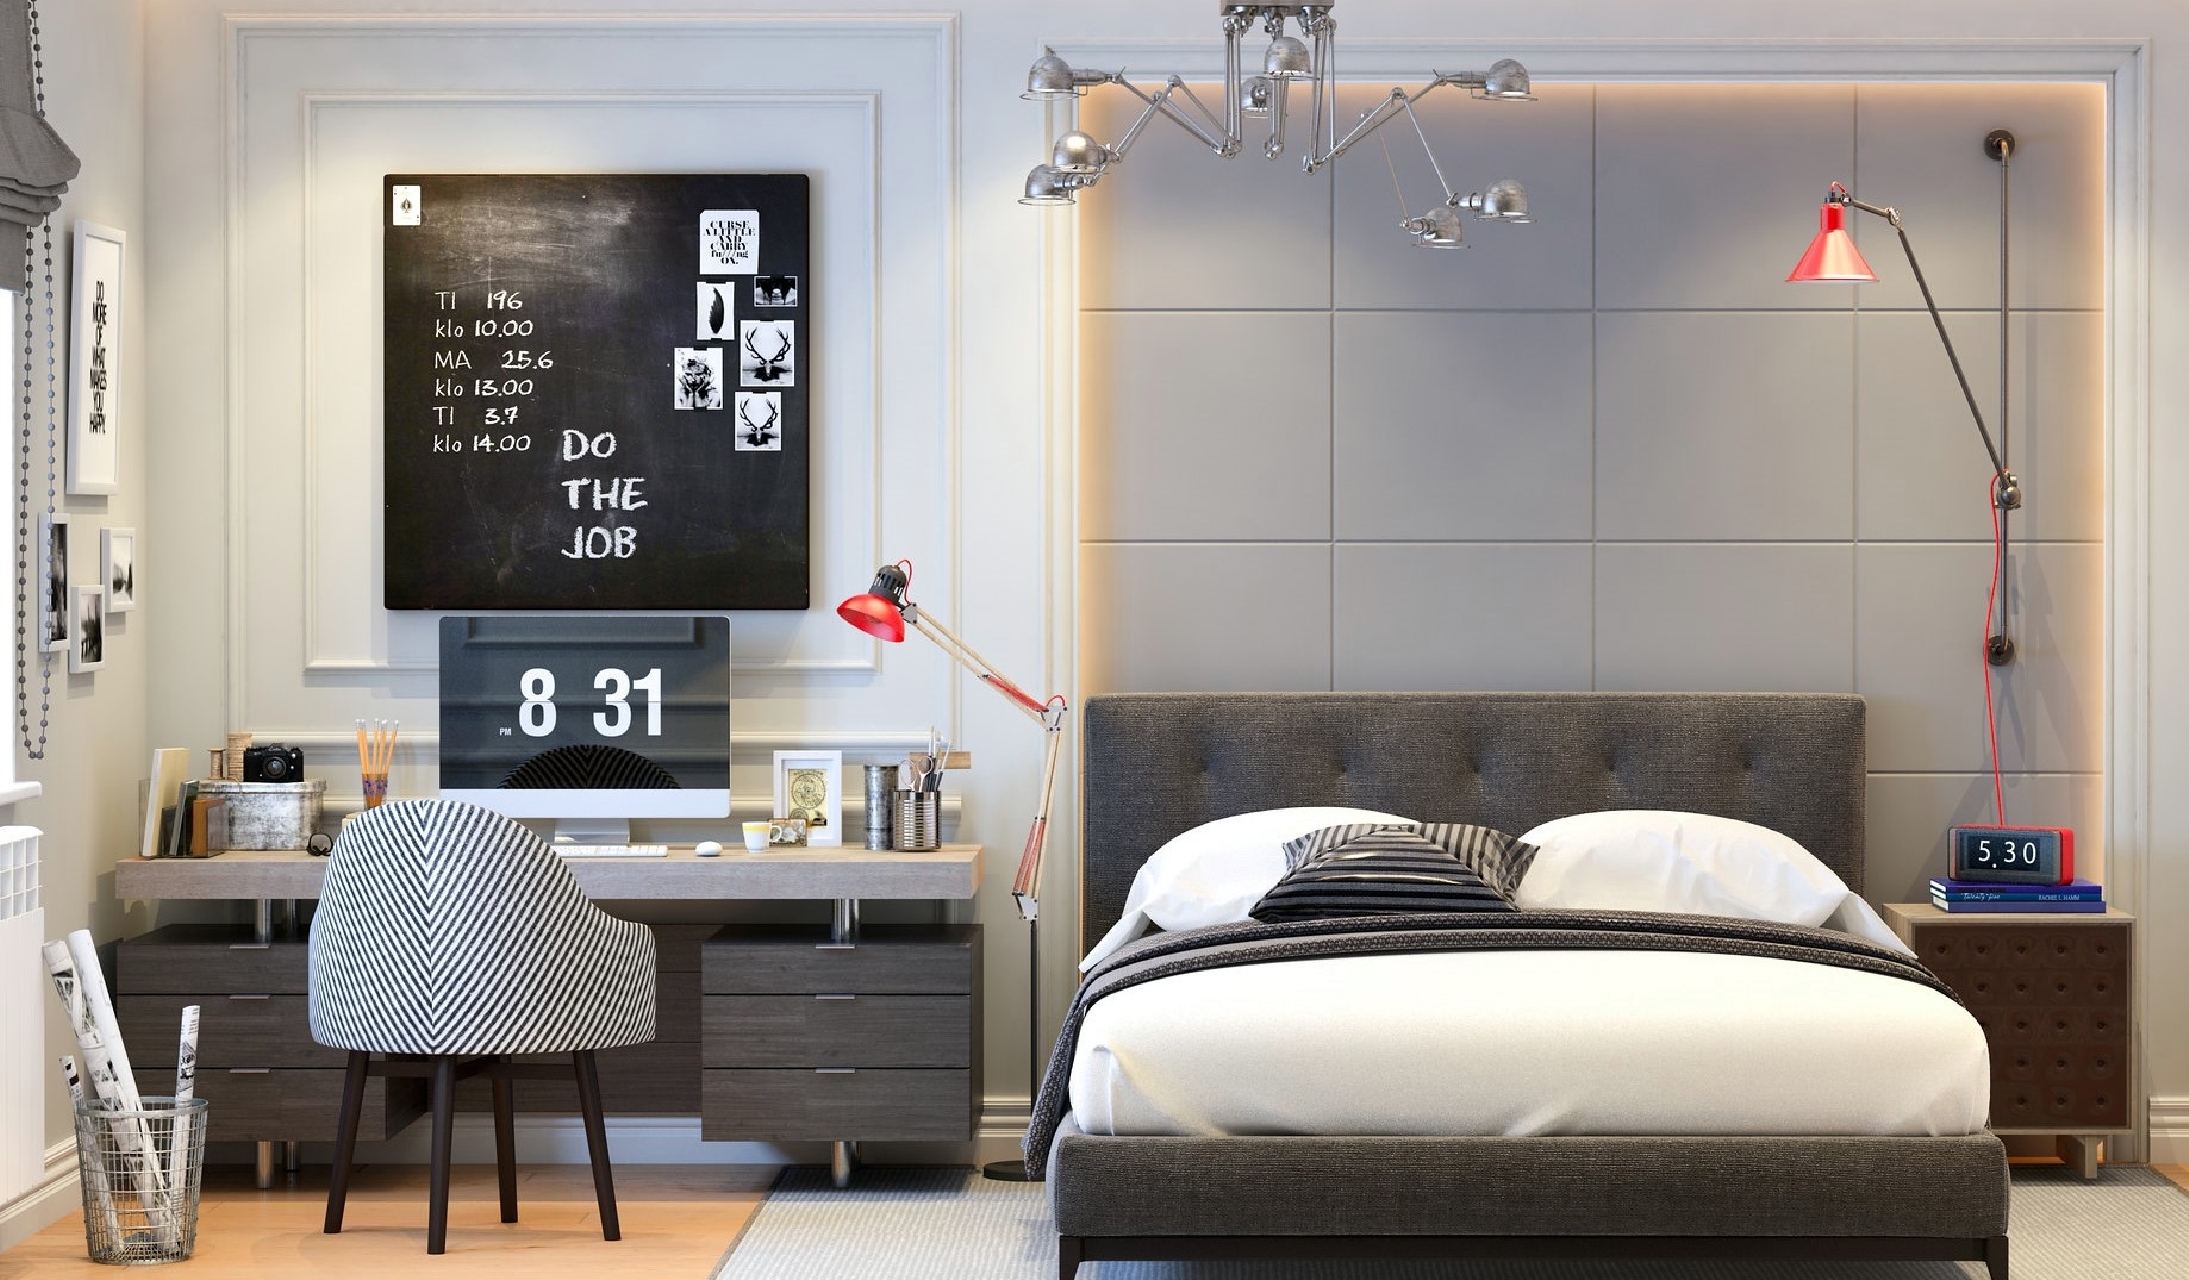 7 Tips mendekorasi kamar tidur yang nyaman bergaya minimalis